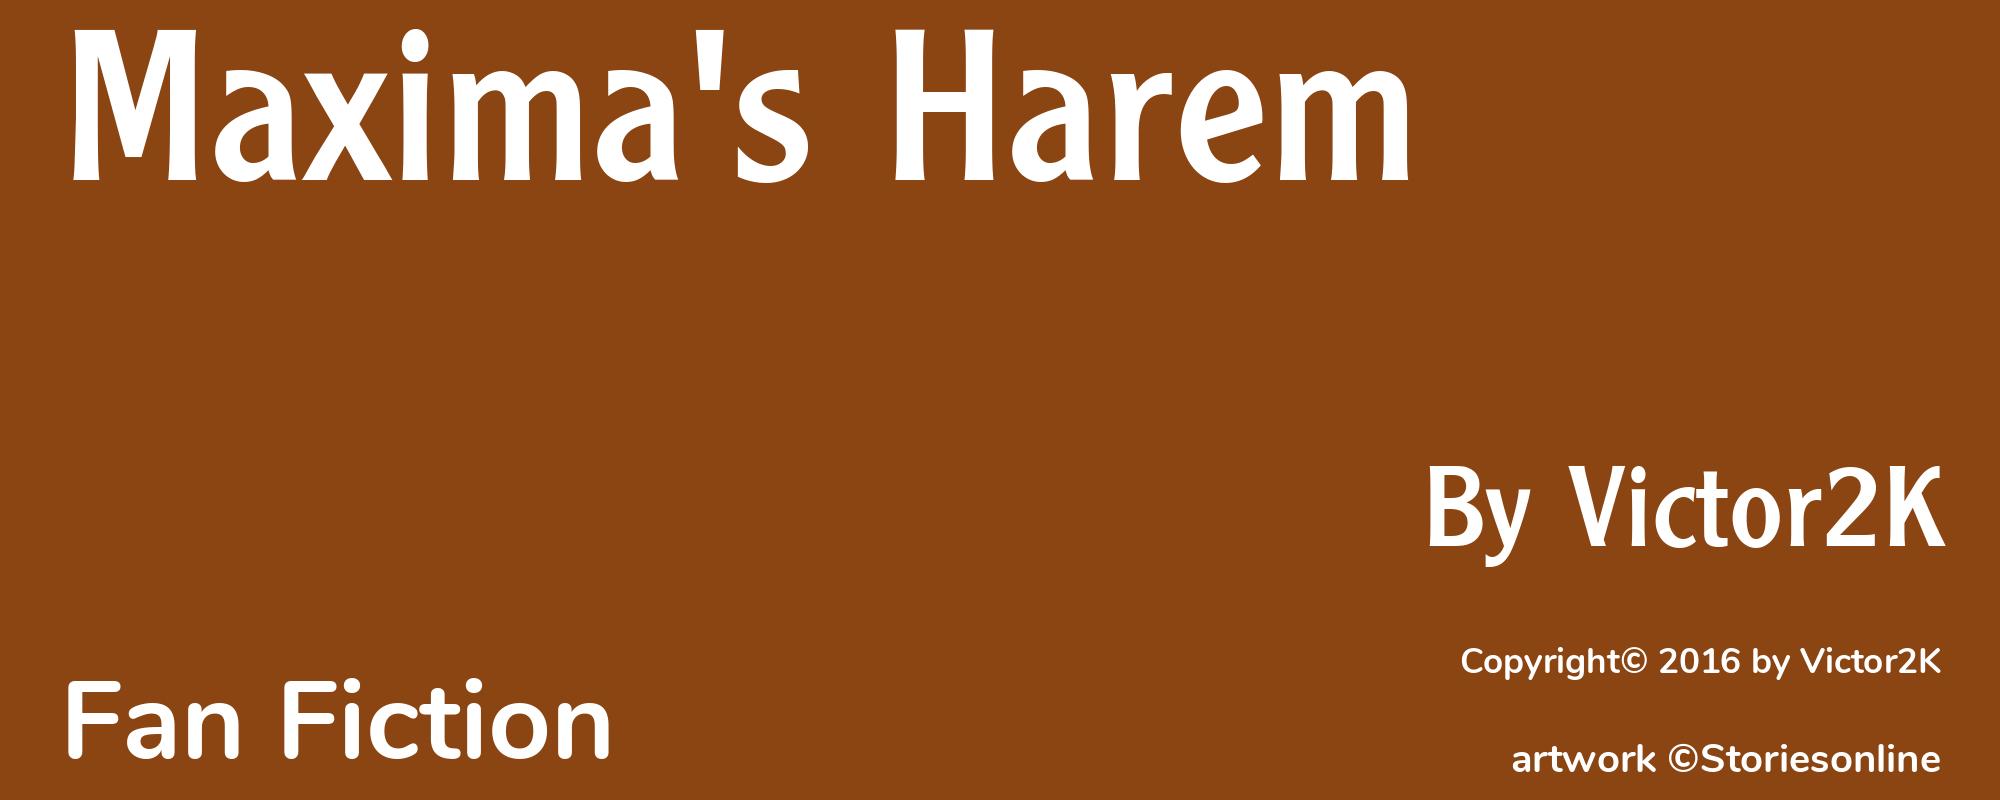 Maxima's Harem - Cover